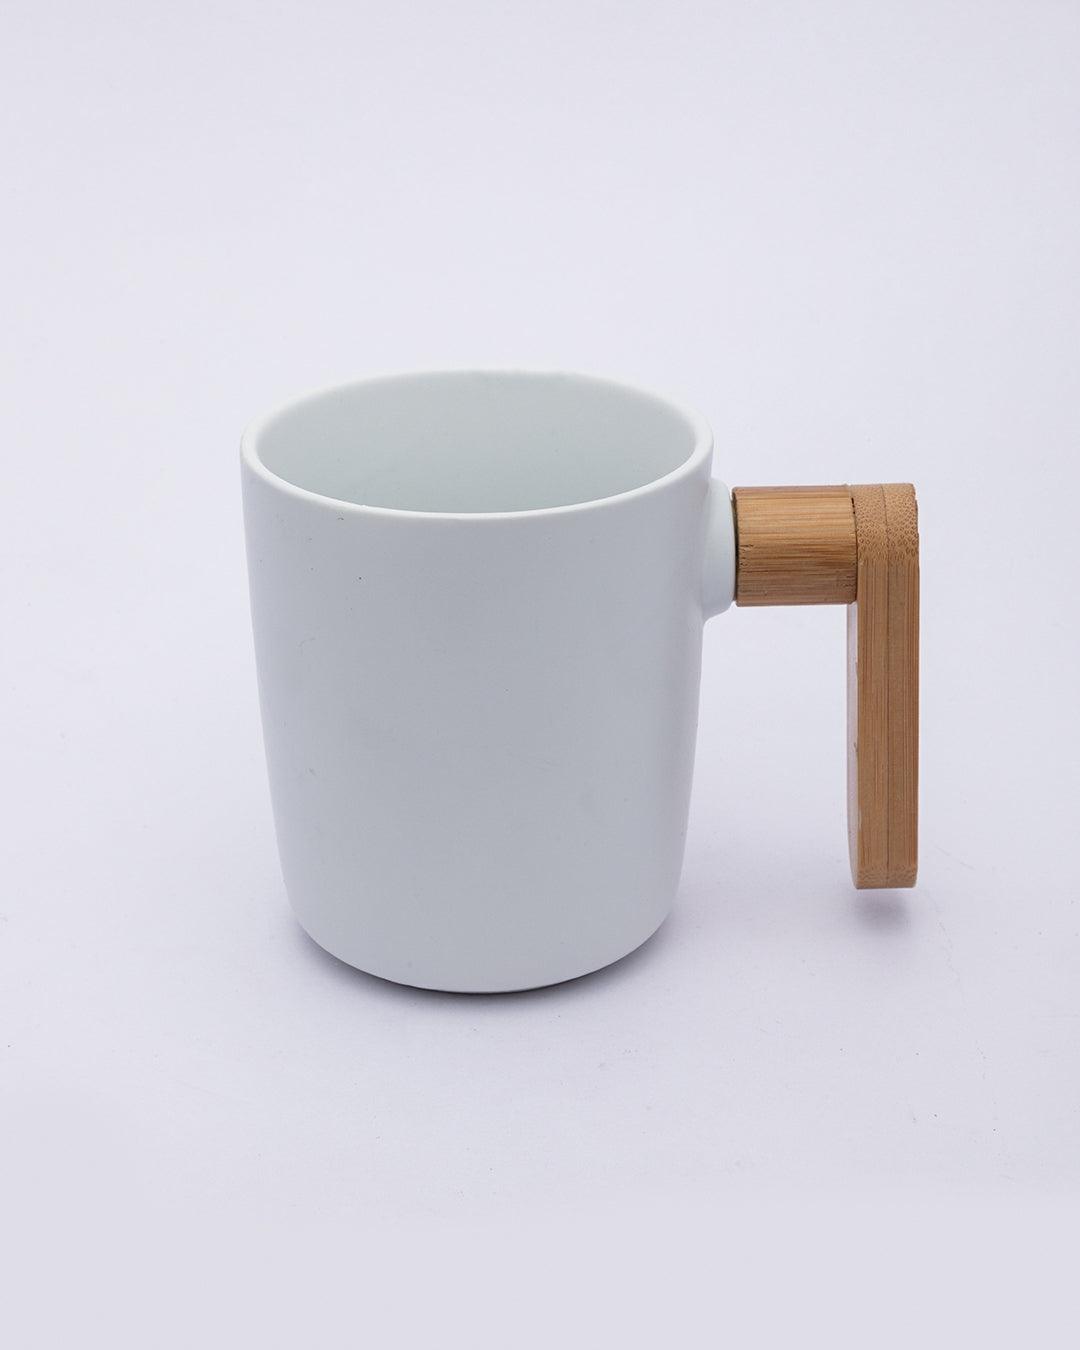 Market99 Bowls & Mug Set, with Wooden Tray, White, Ceramic & Bamboo, Set of 2 Bowls & a Mug - MARKET 99